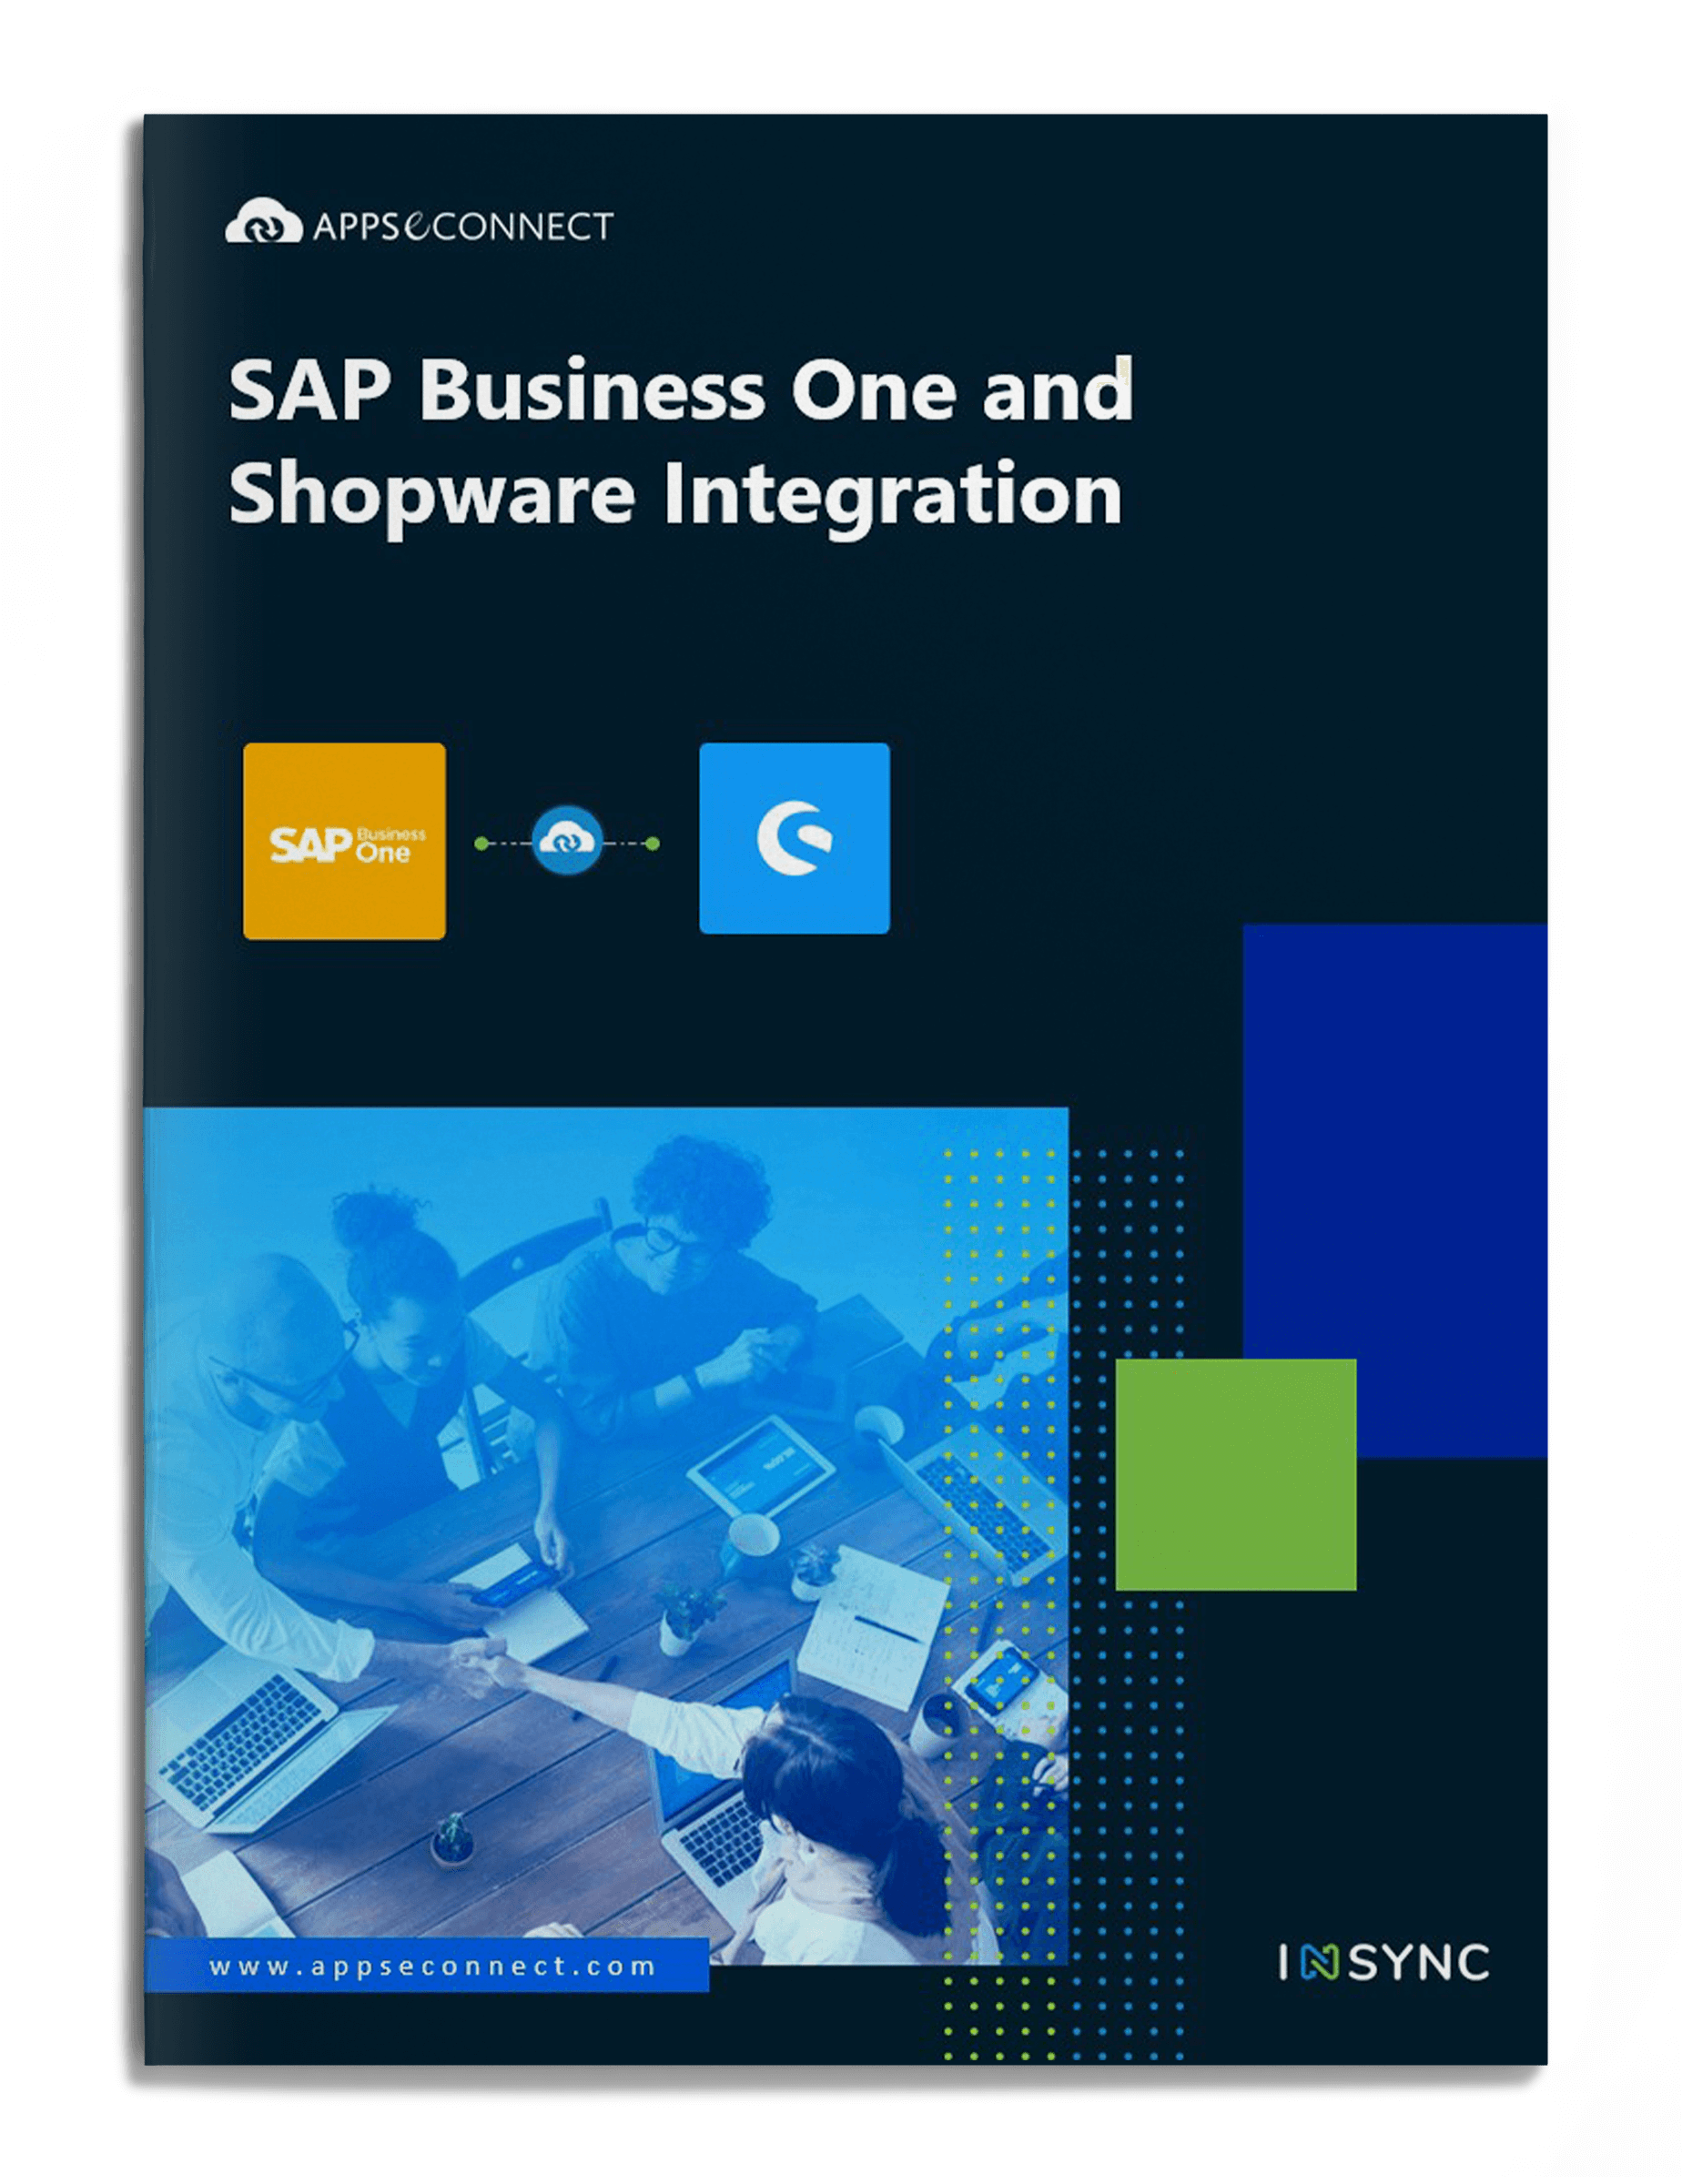 sap-business-one-shopware-integration-brochure-cover